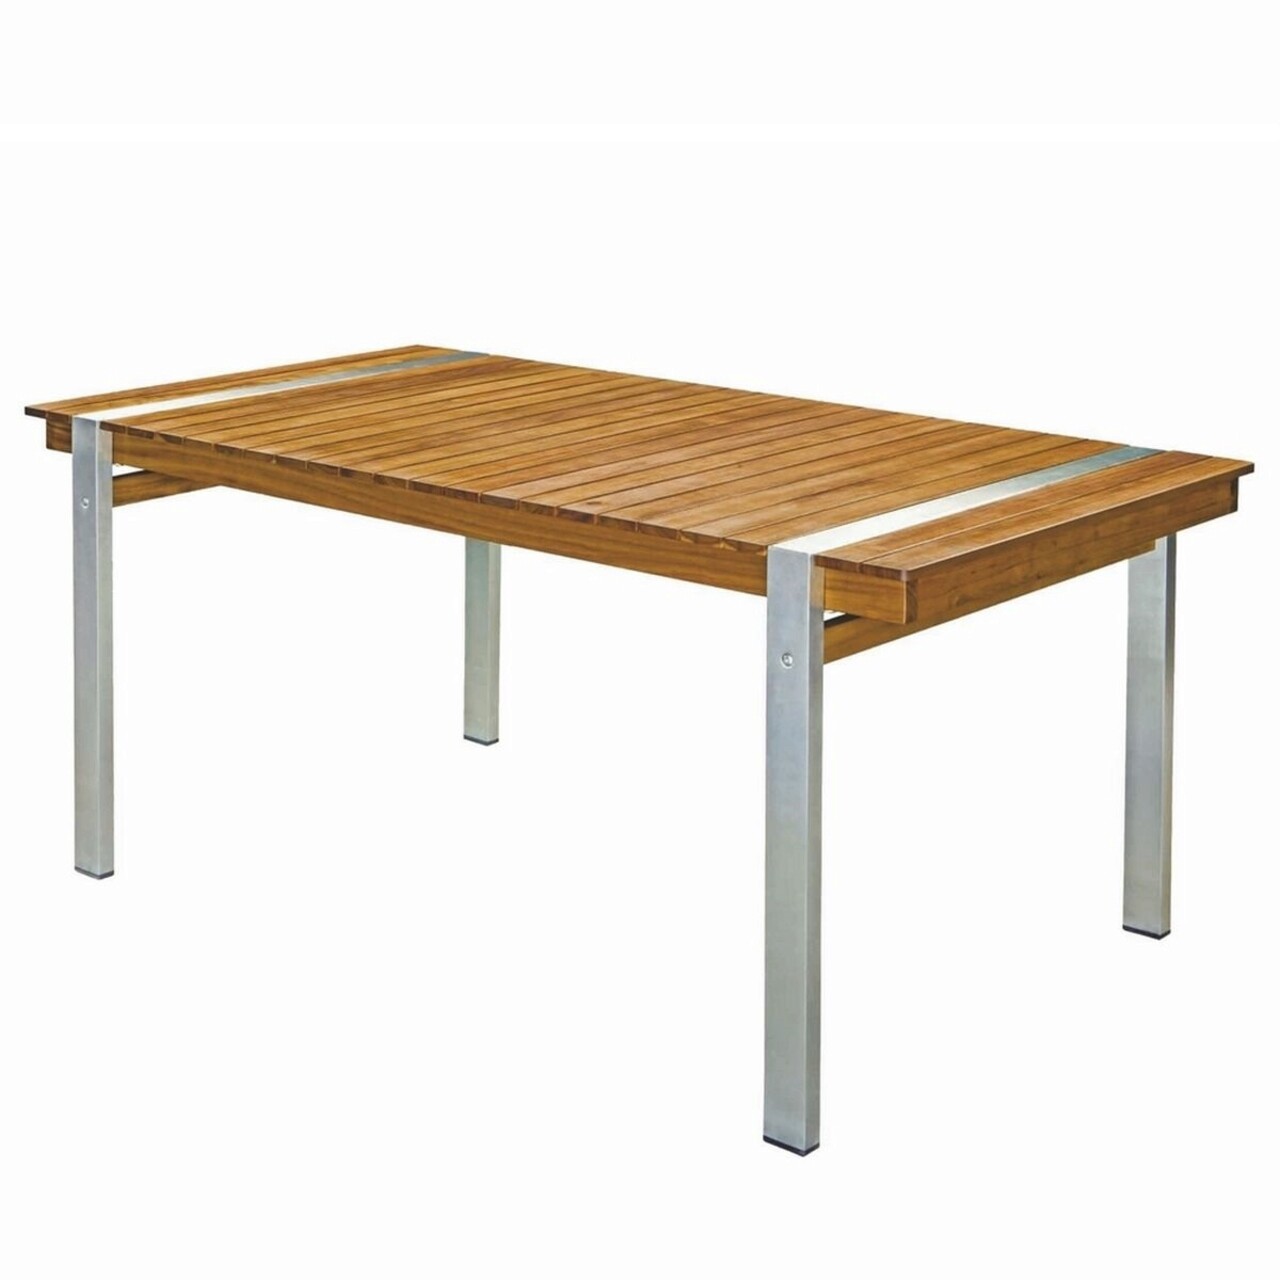 BigBuy Home Norah Kerti asztal, 220 x 100 x 74 cm, akácfa/rozsdamentes acél